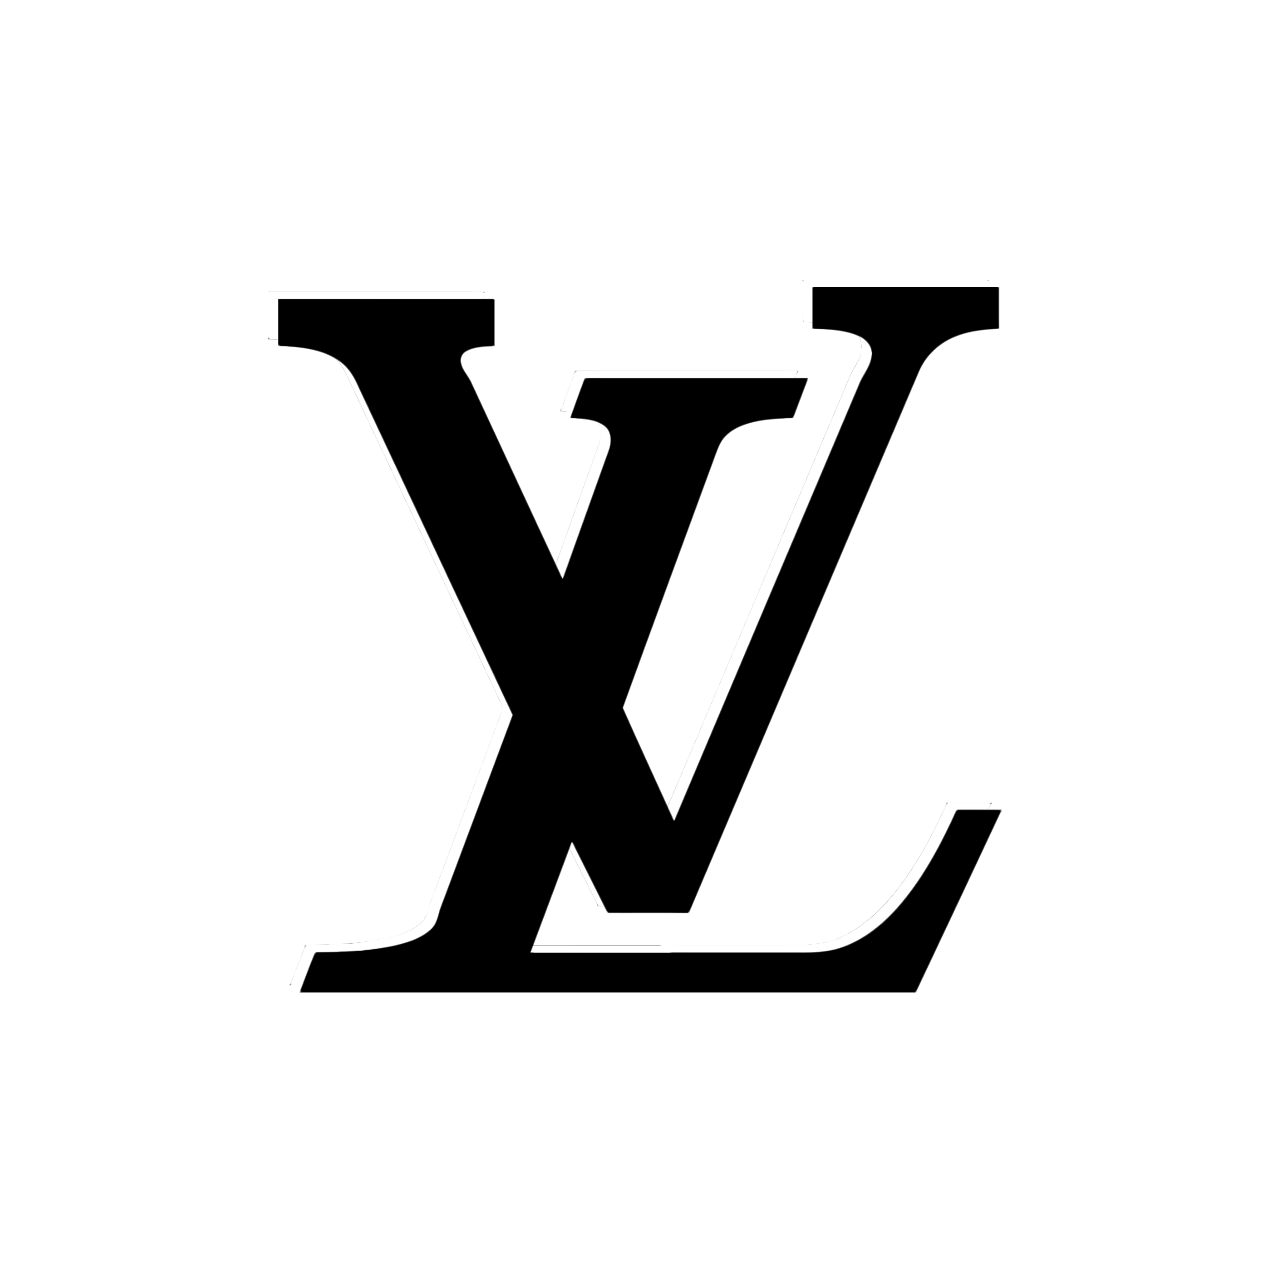 lv logo